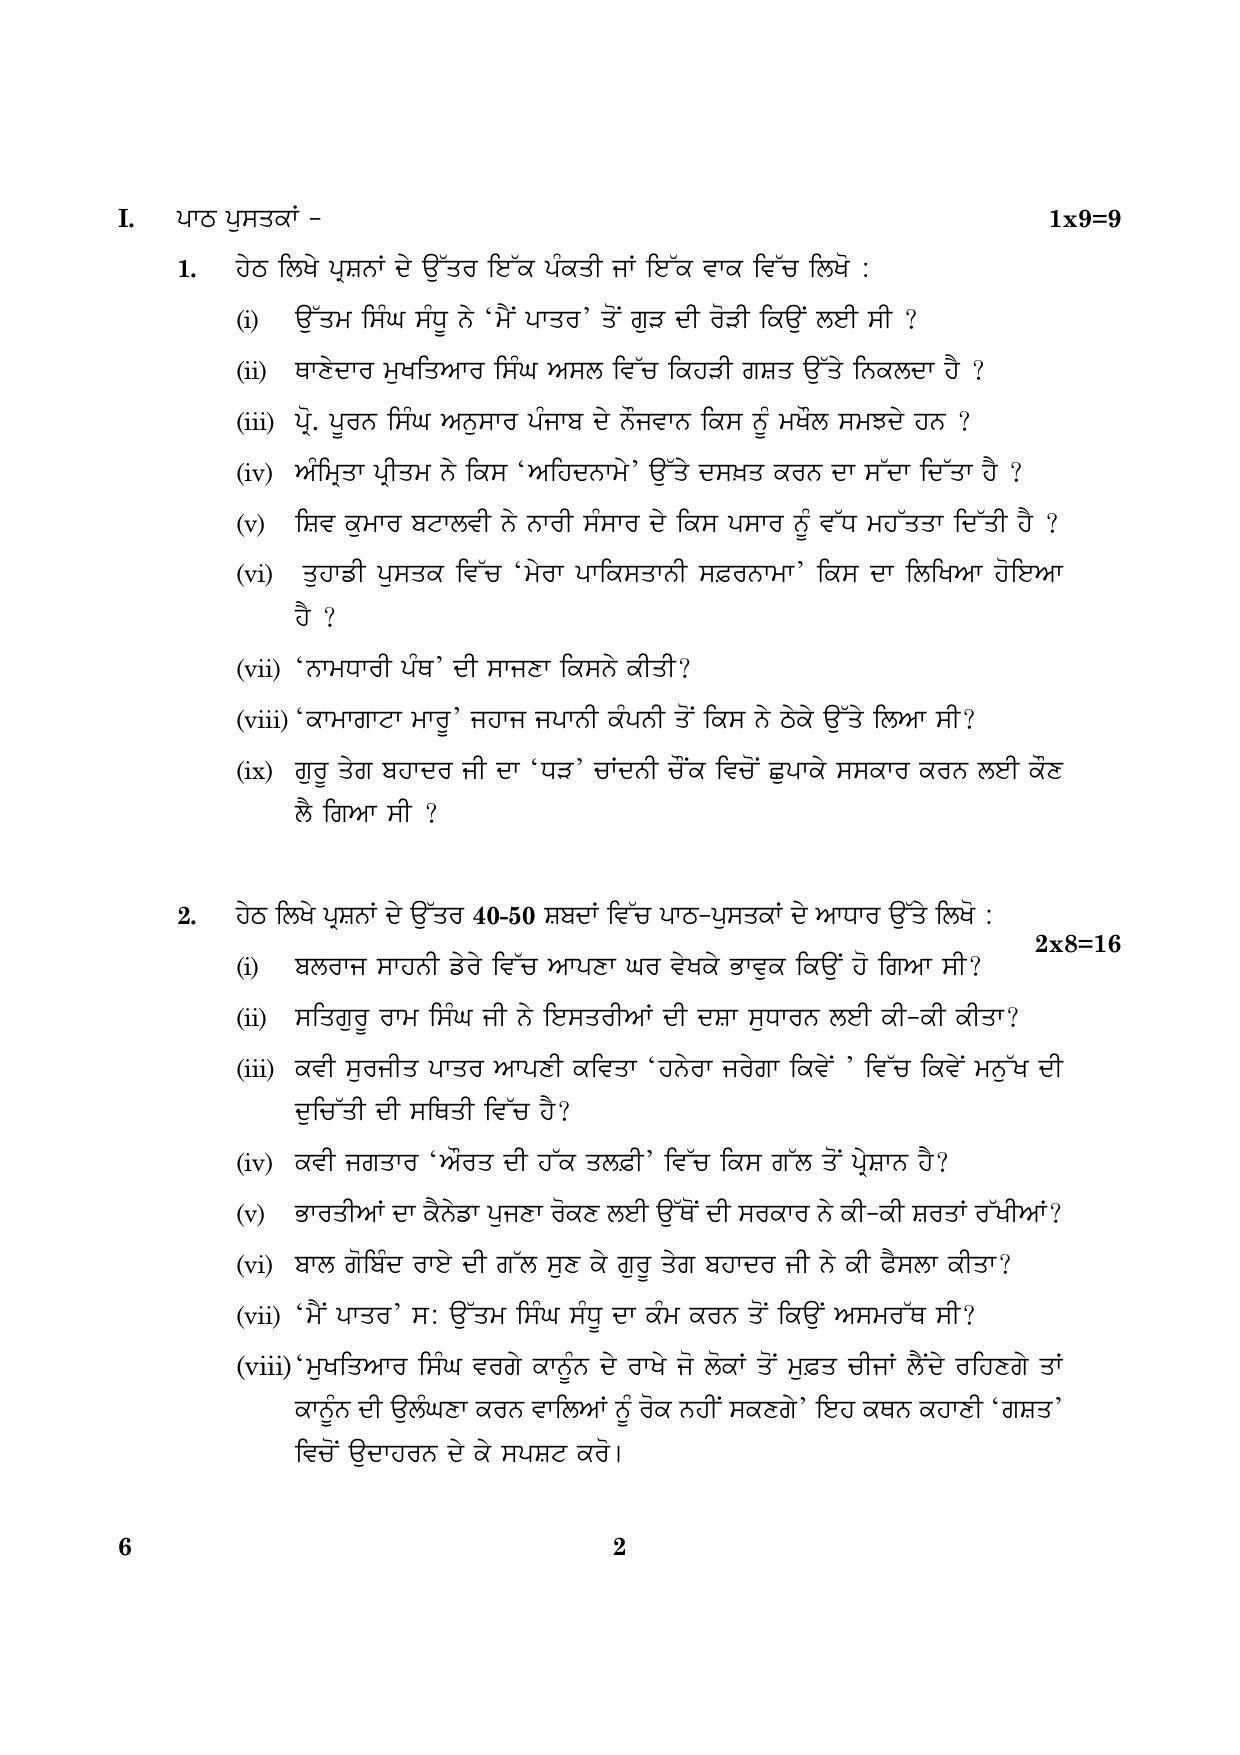 CBSE Class 10 006 Punjabi 2016 Question Paper - Page 2